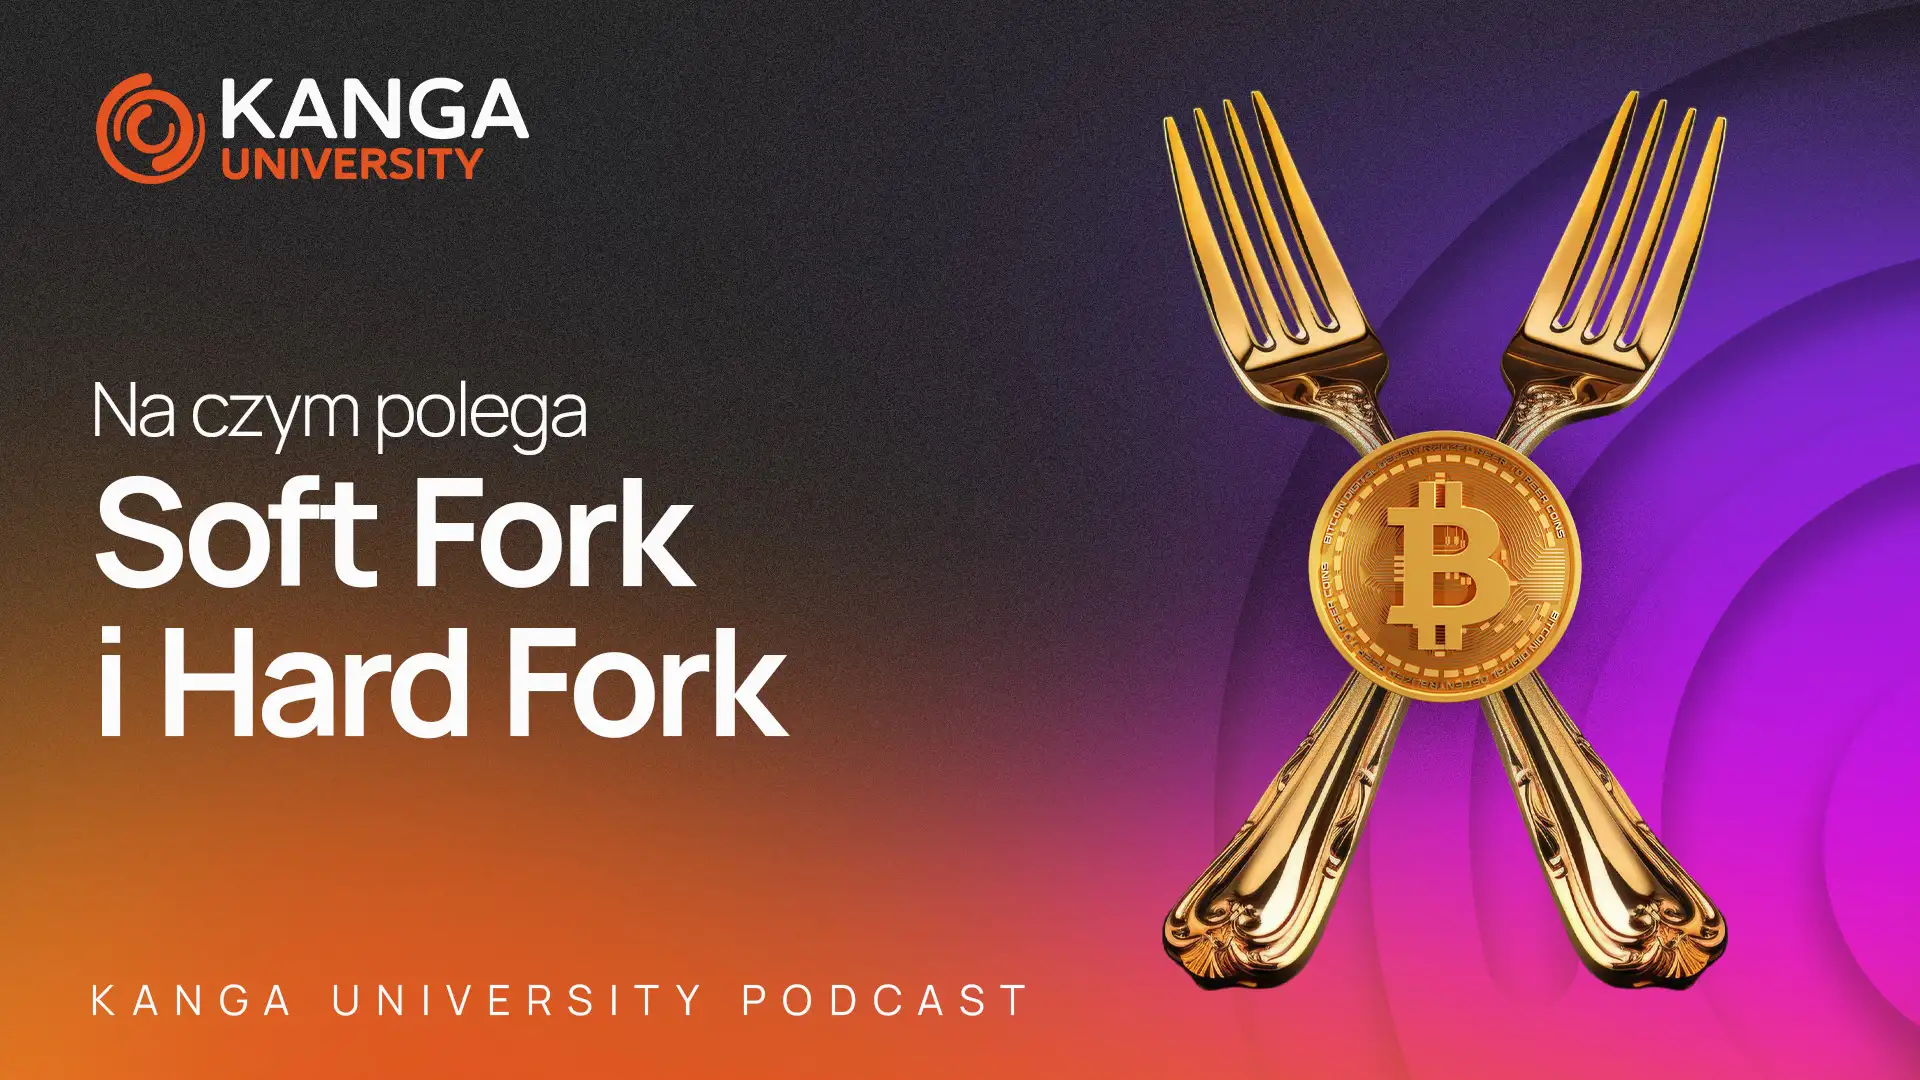 Kanga University Podcast #19 | Na czym polega Soft Fork i Hard Fork | Część I